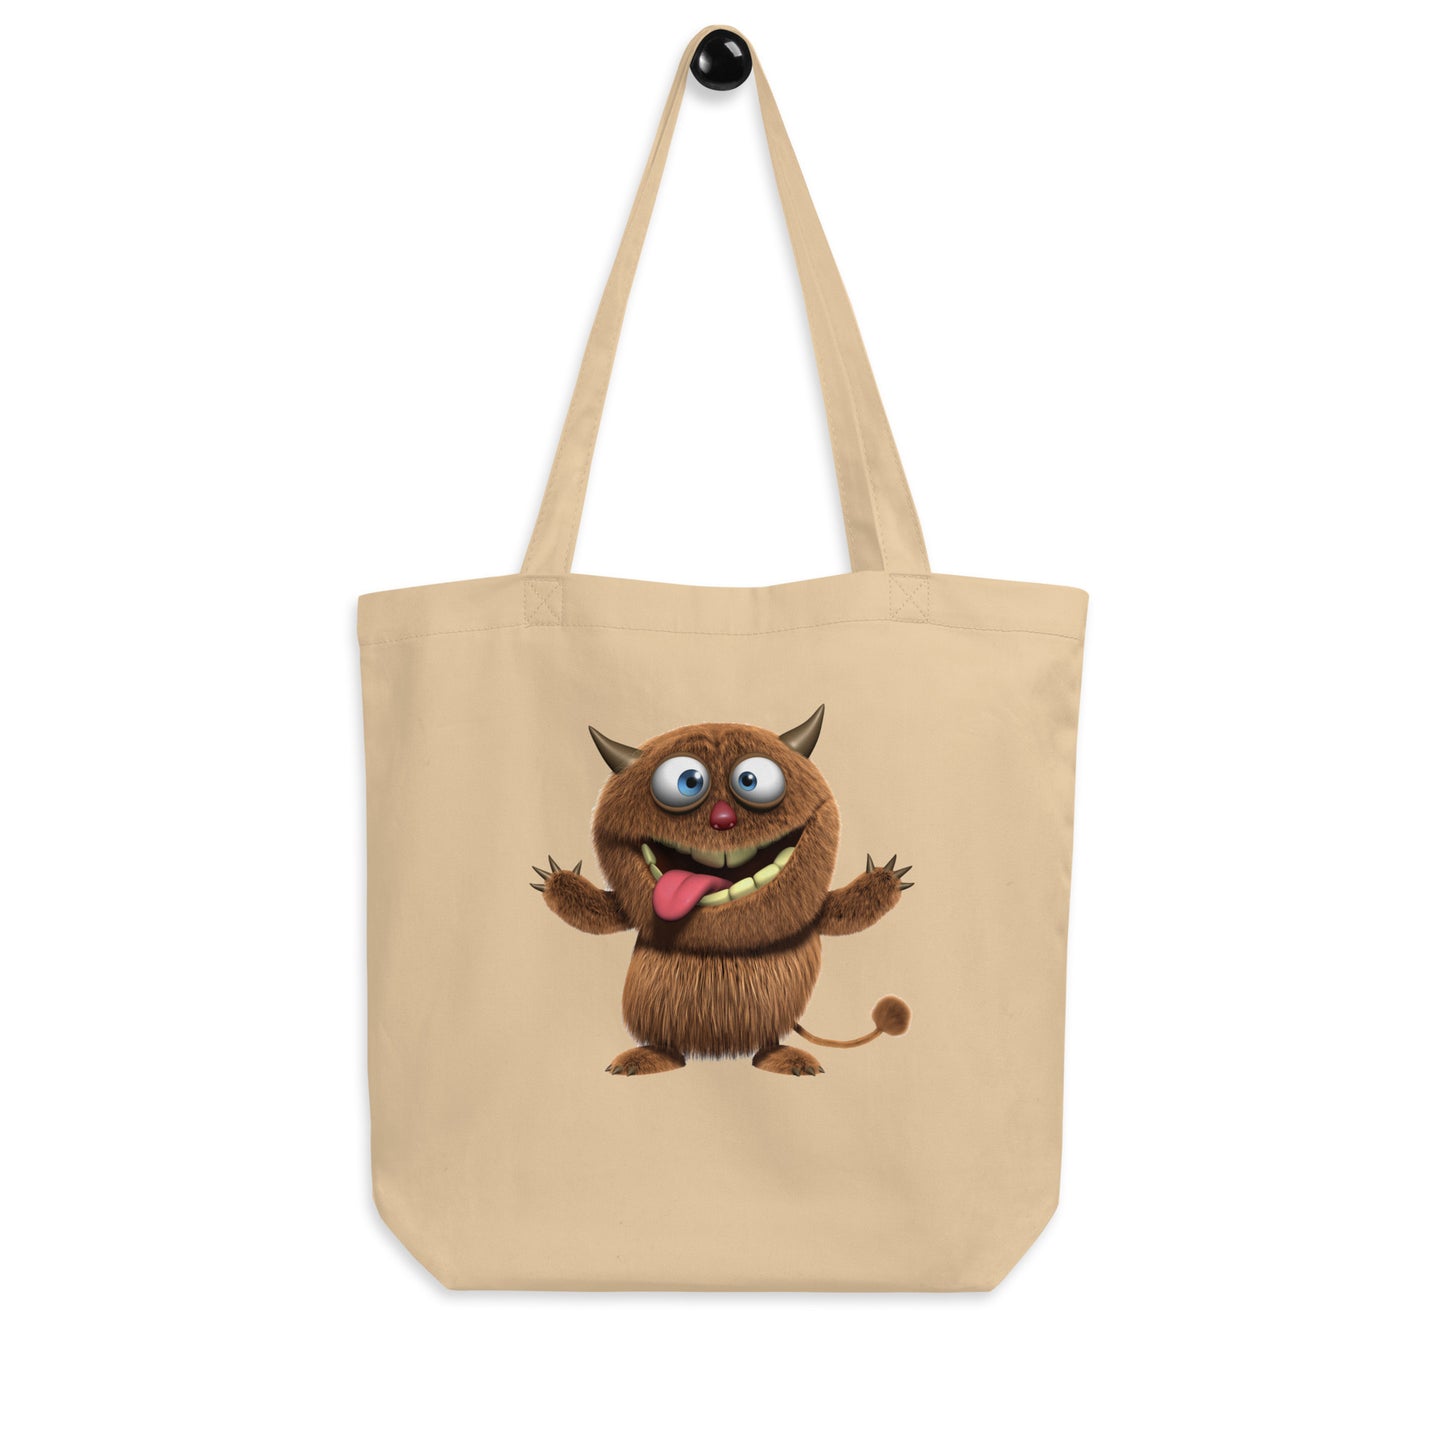 Kids Will Giggle THUMPER TOTE BAG - Fun Humorous Goofy Pulphouse Fiction Magazine Eco Organic Tote Bag